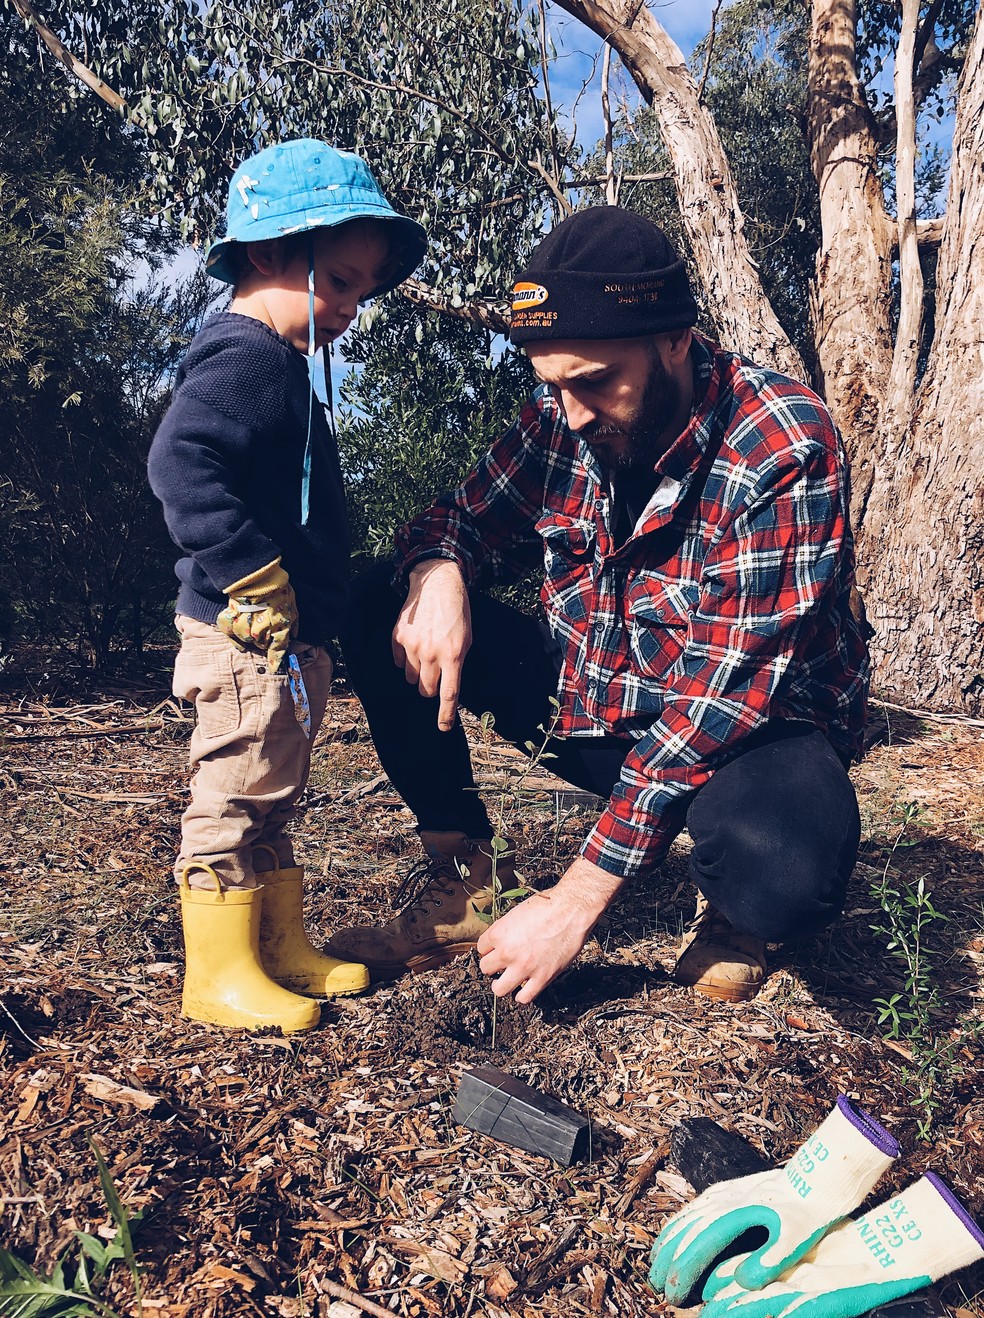 Pai e filho plantando árvores — Foto: Crema Joe/Unplash